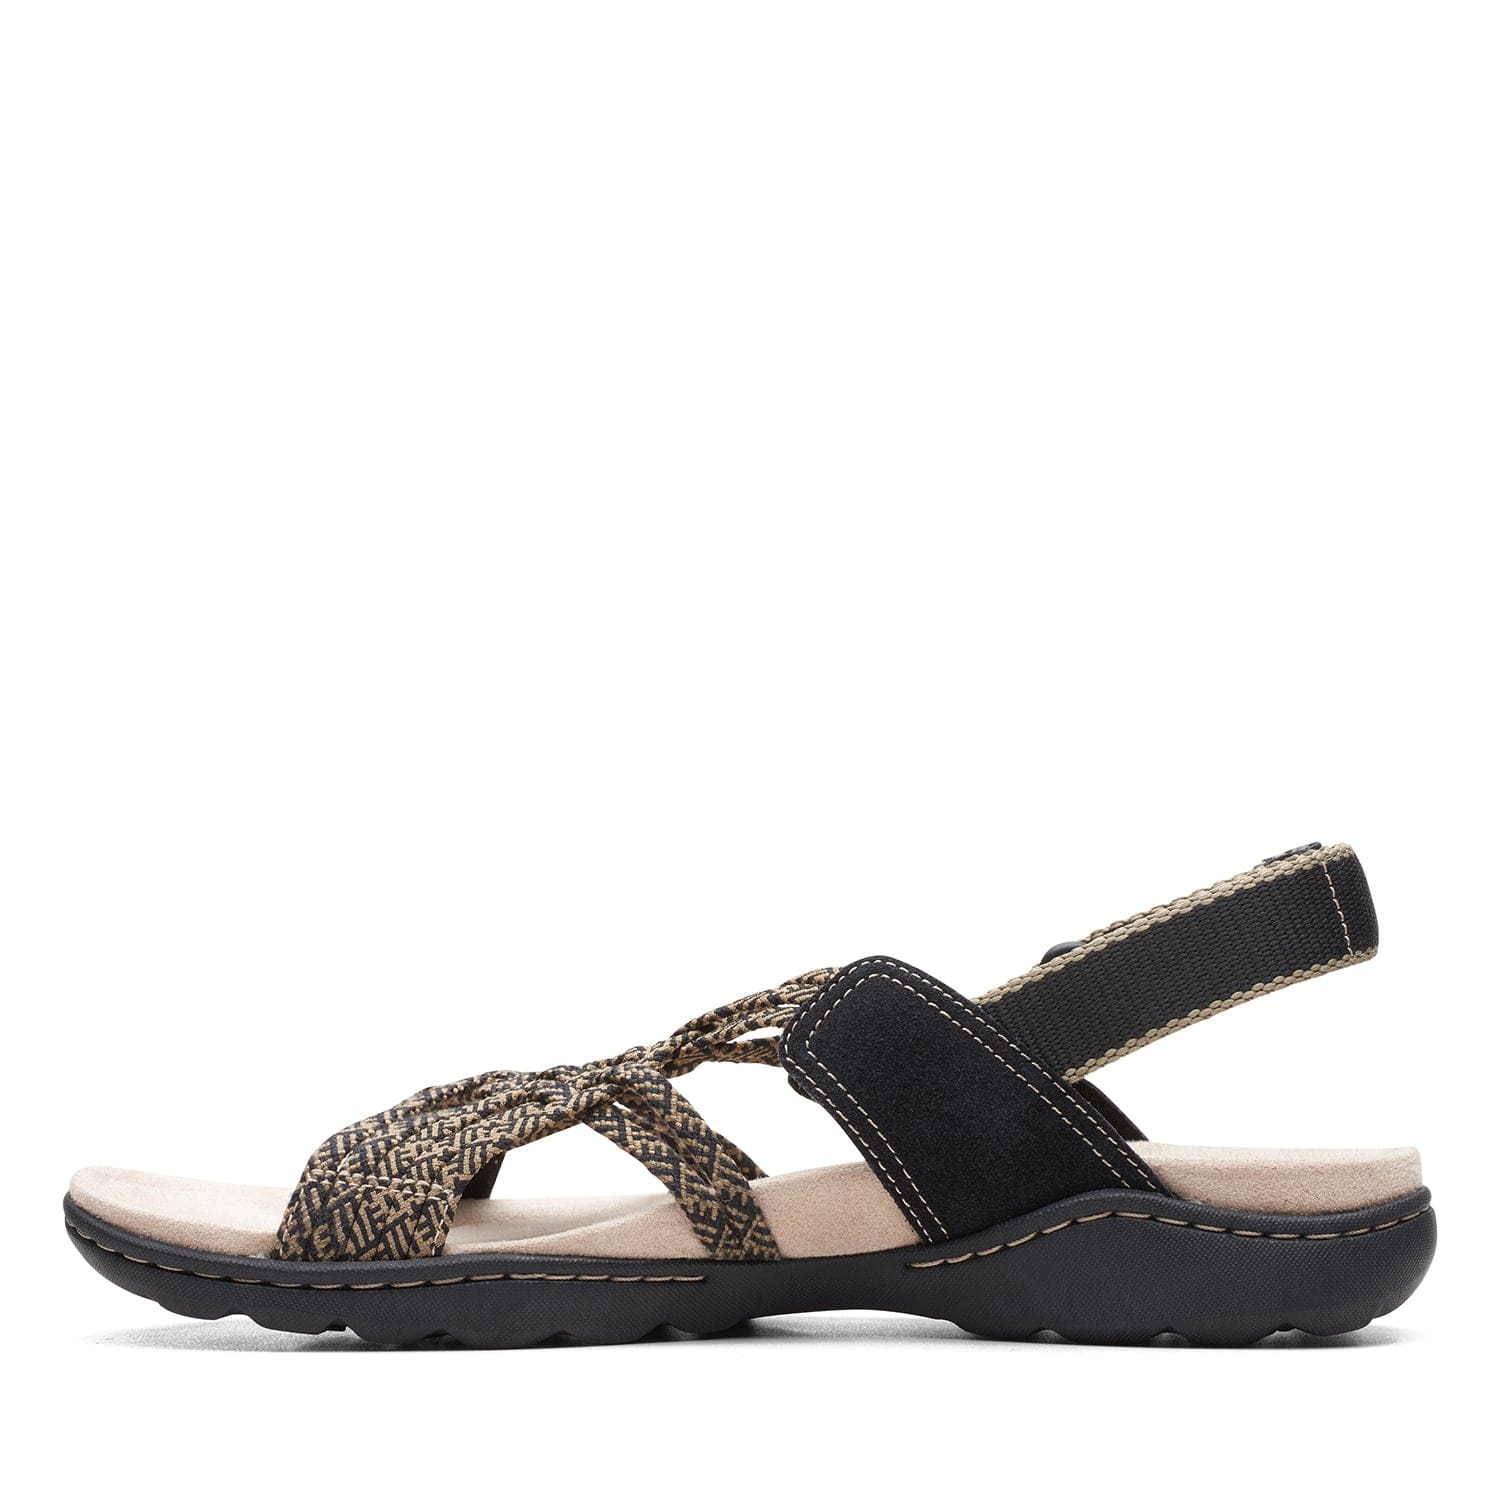 Clarks Amanda Ease Sandals - Black Combi - 261653744 - D Width (Standard Fit)